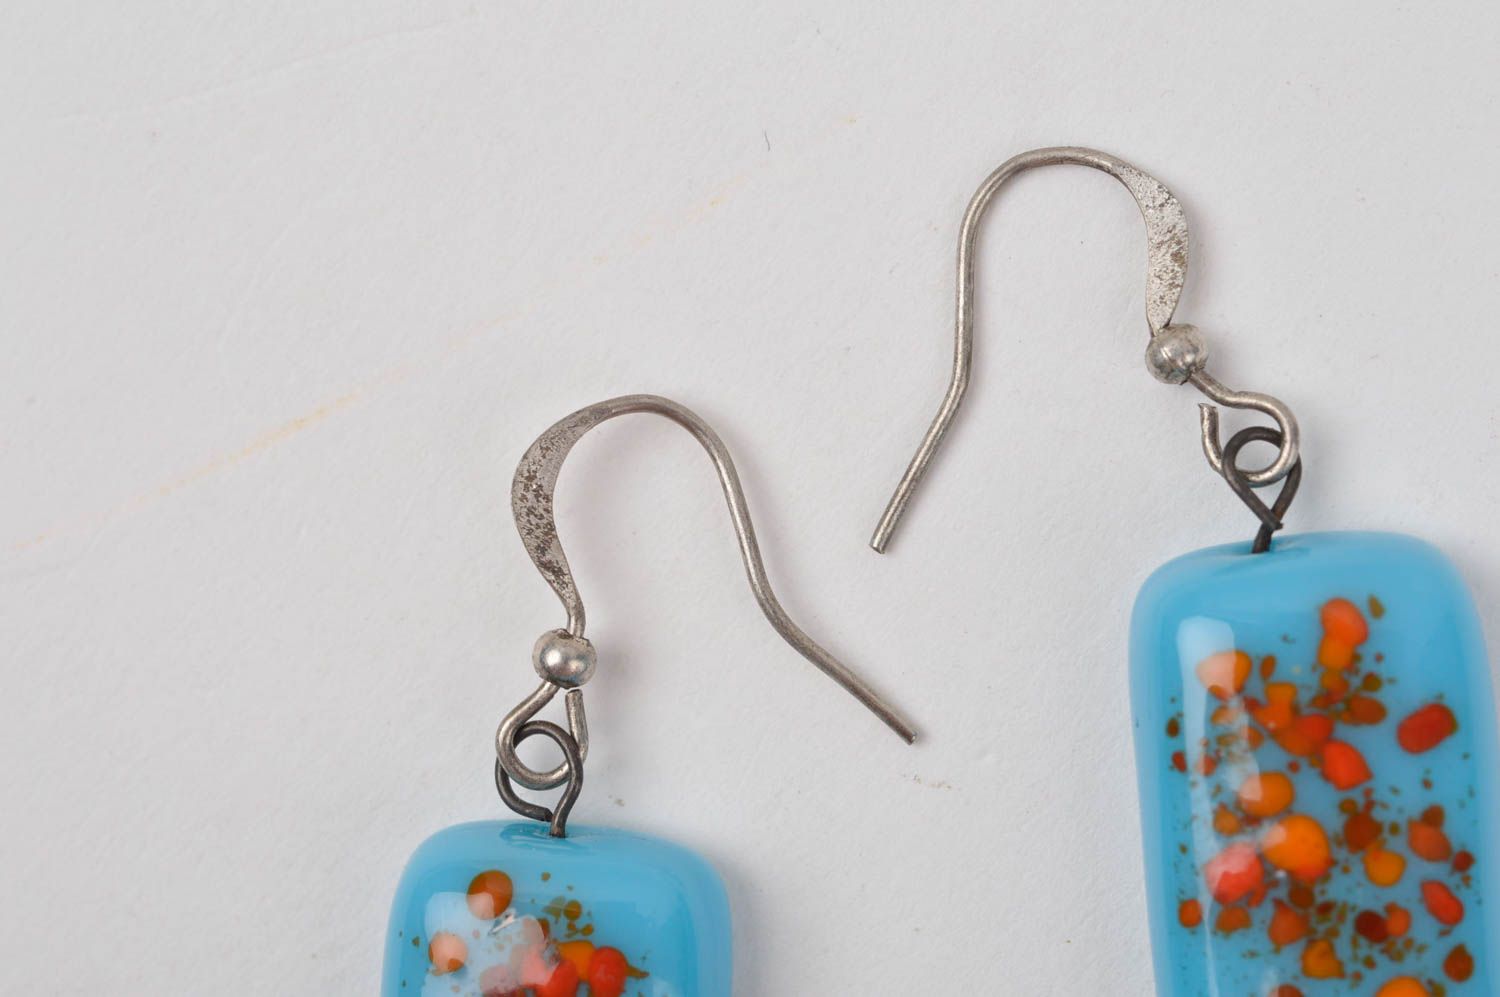 Stylish handmade glass earrings artisan jewelry designs accessories for girls photo 3